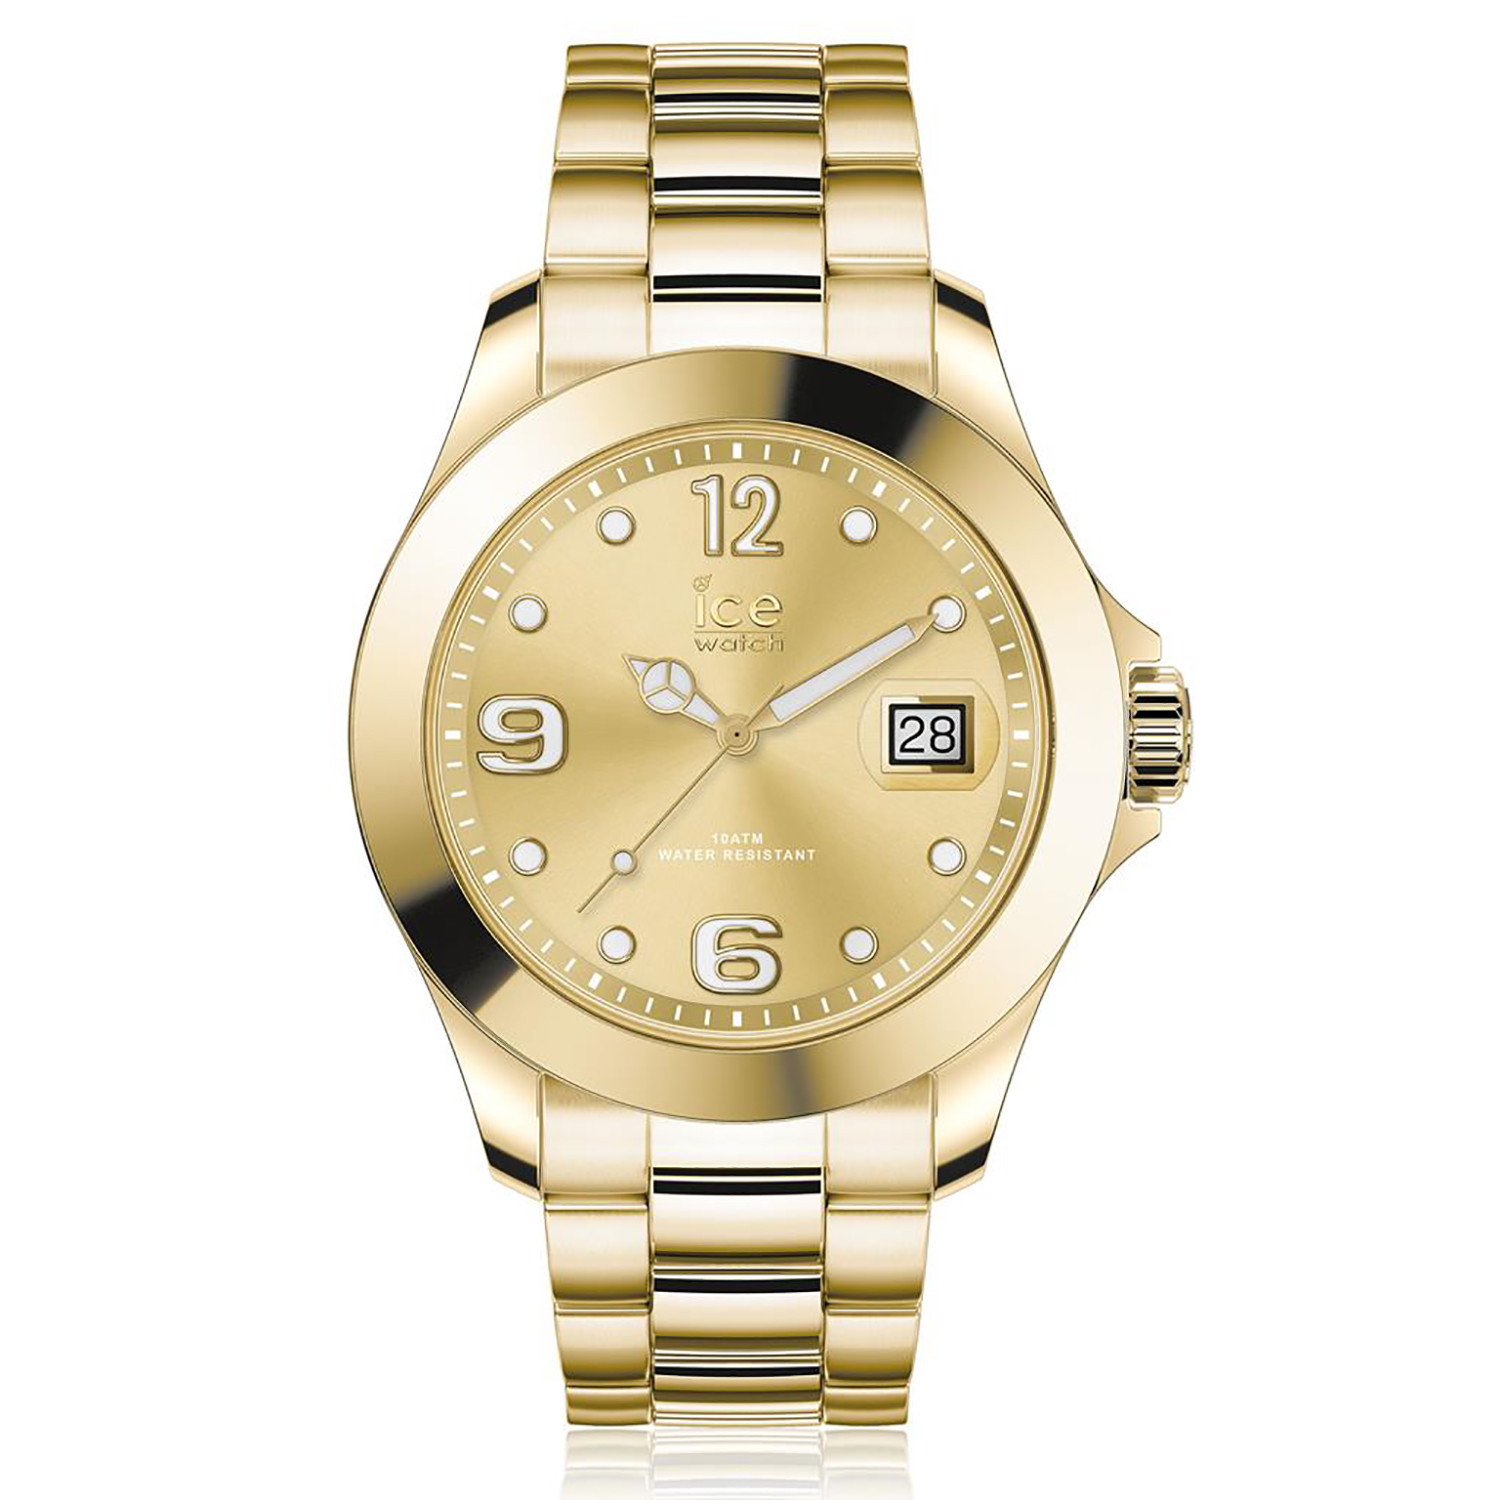 Montre femme Ice Watch steel classic light gold